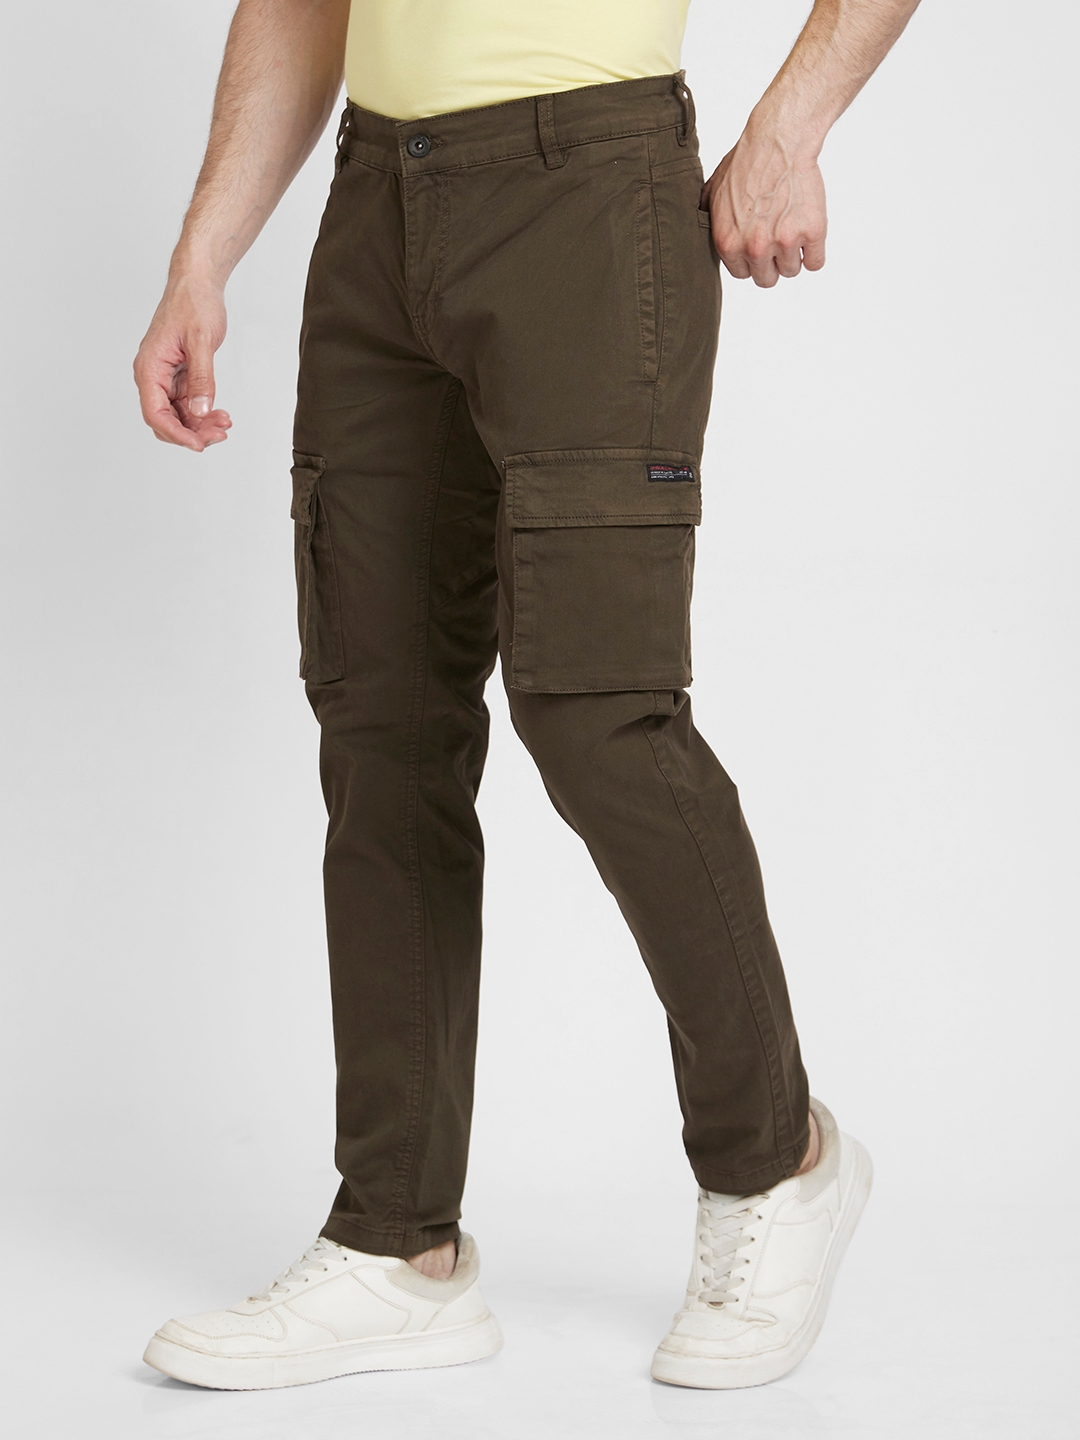 Spykar Men Mud Brown Cotton Slim Fit Ankle Length Cargo Pants   vot02bbcg031mudbrown